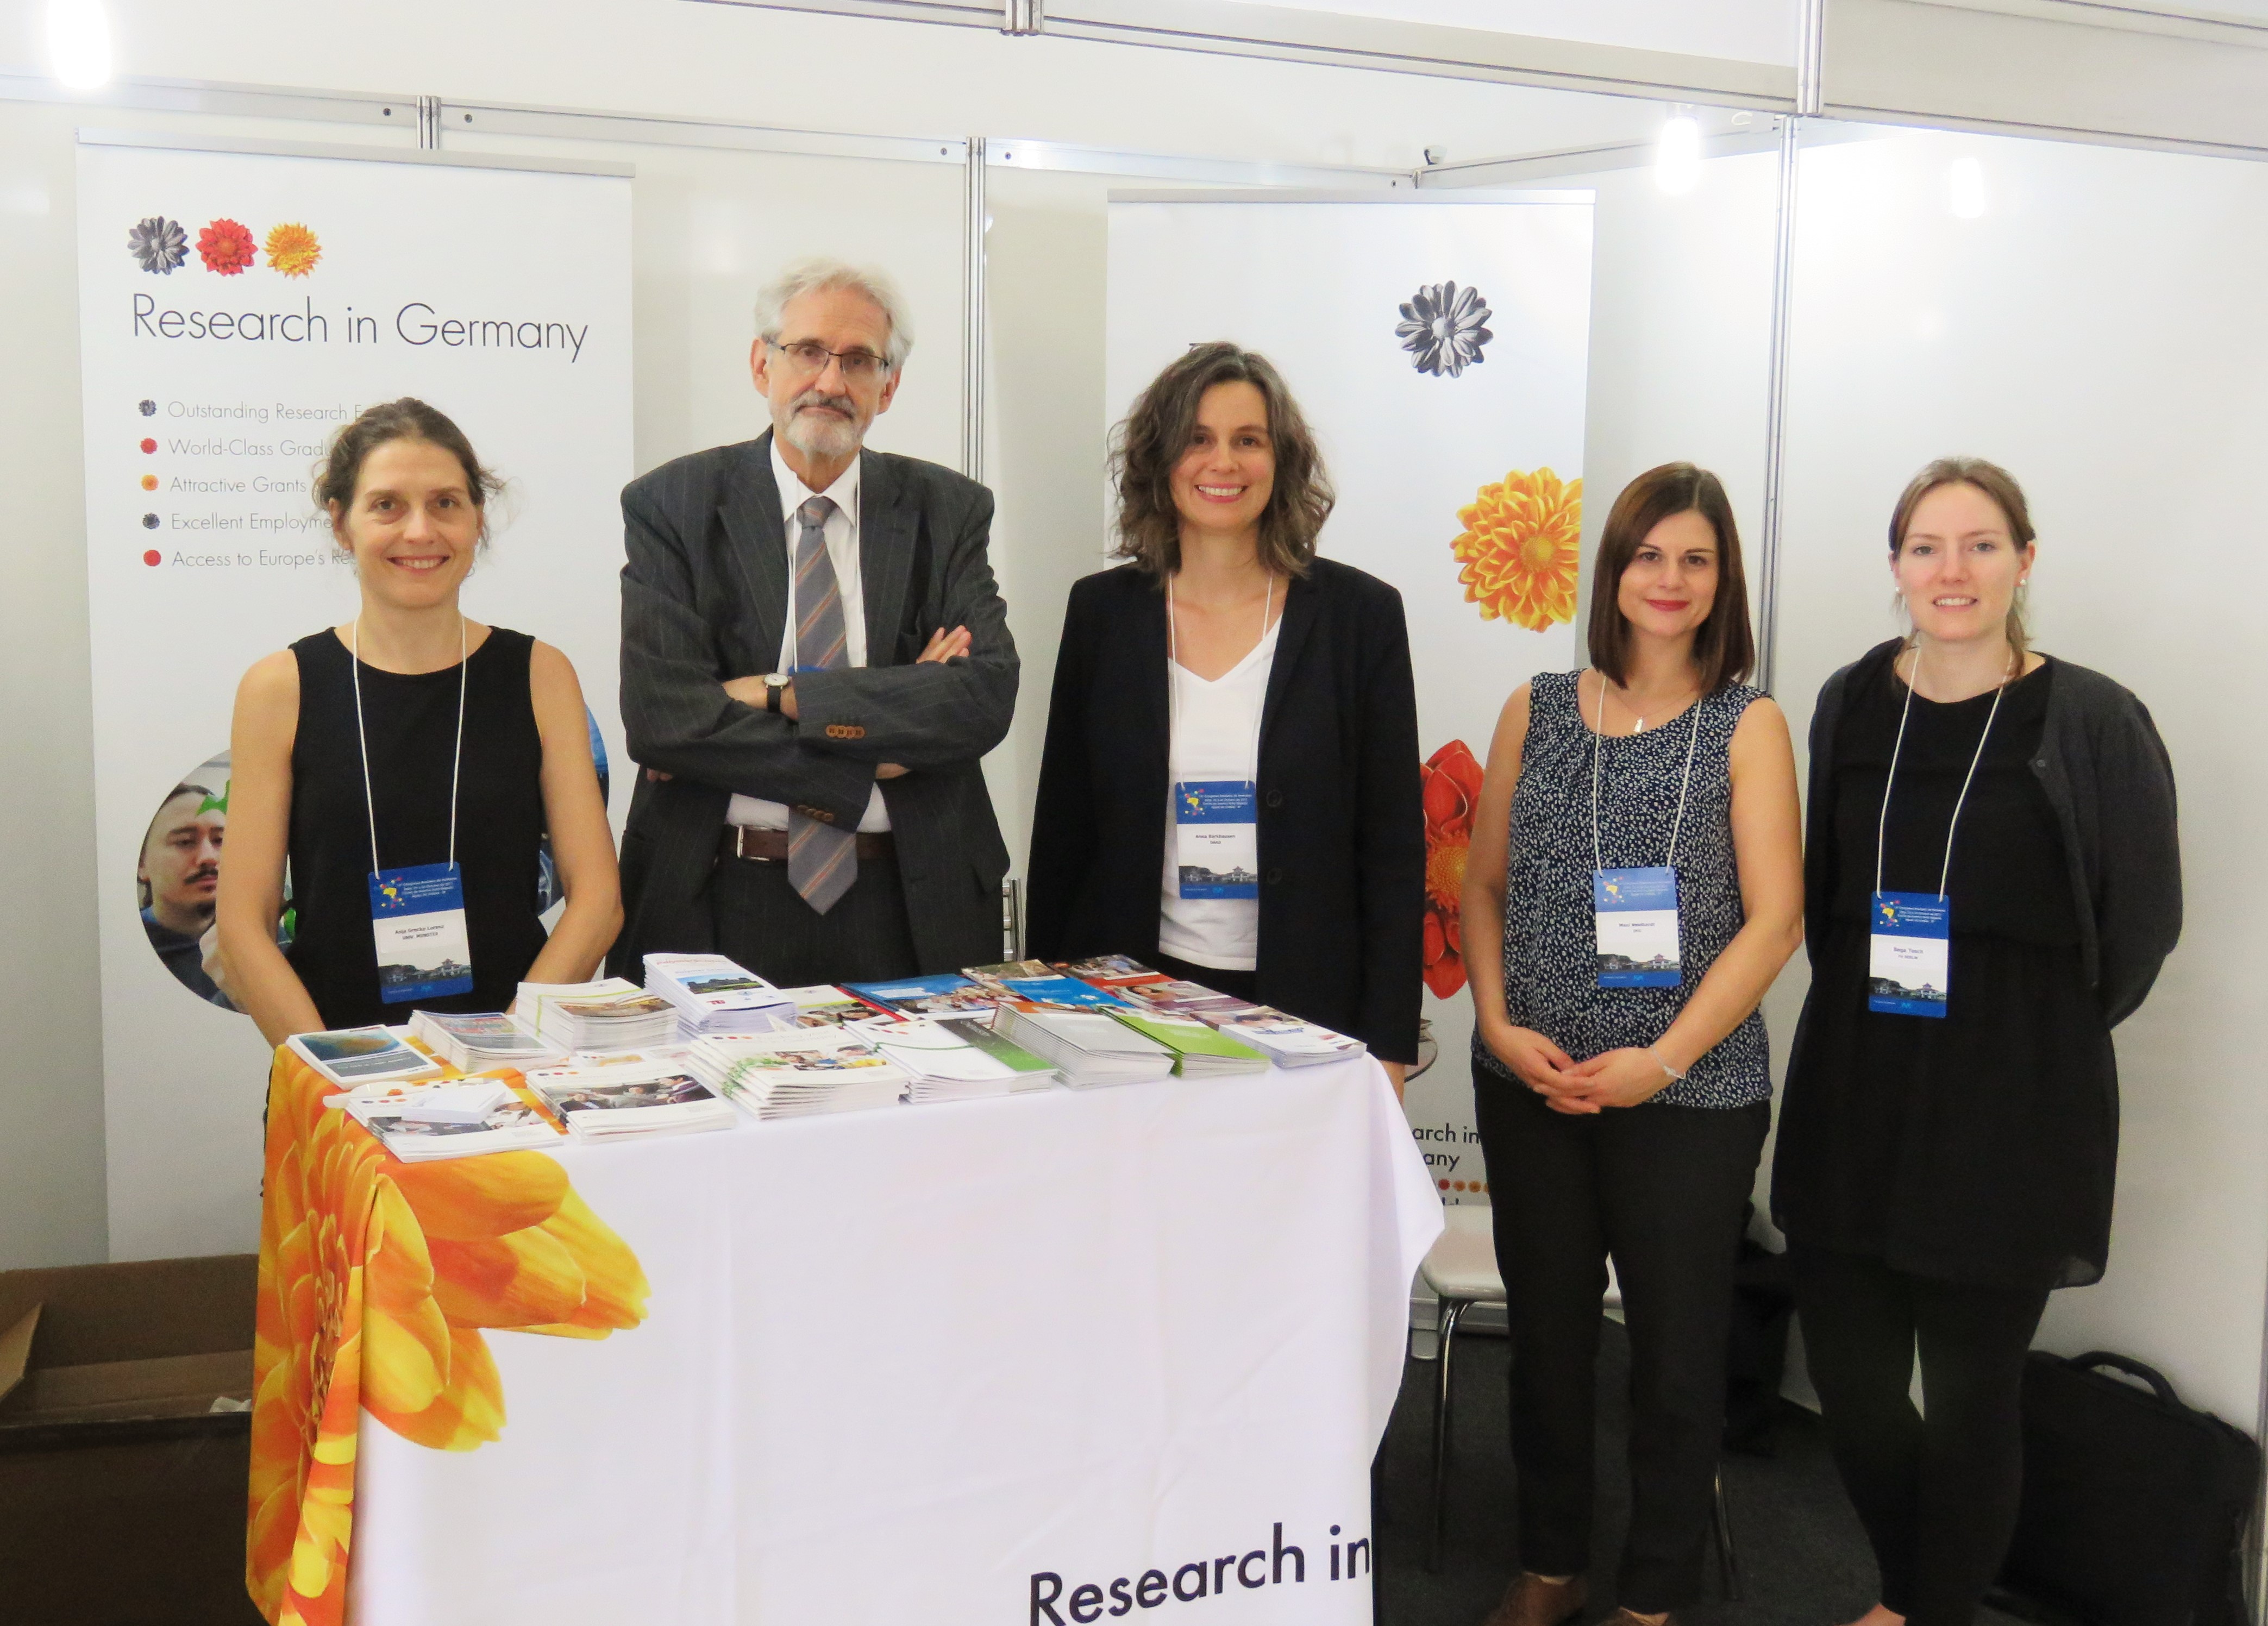 Anja Grecko (WWU Münster), Helmut Galle (DFG/USP), Anna Barkhausen (DAAD), Maxi Neidhardt (DFG) e Bega Tesch (FU Berlin) no estande Research in Germany